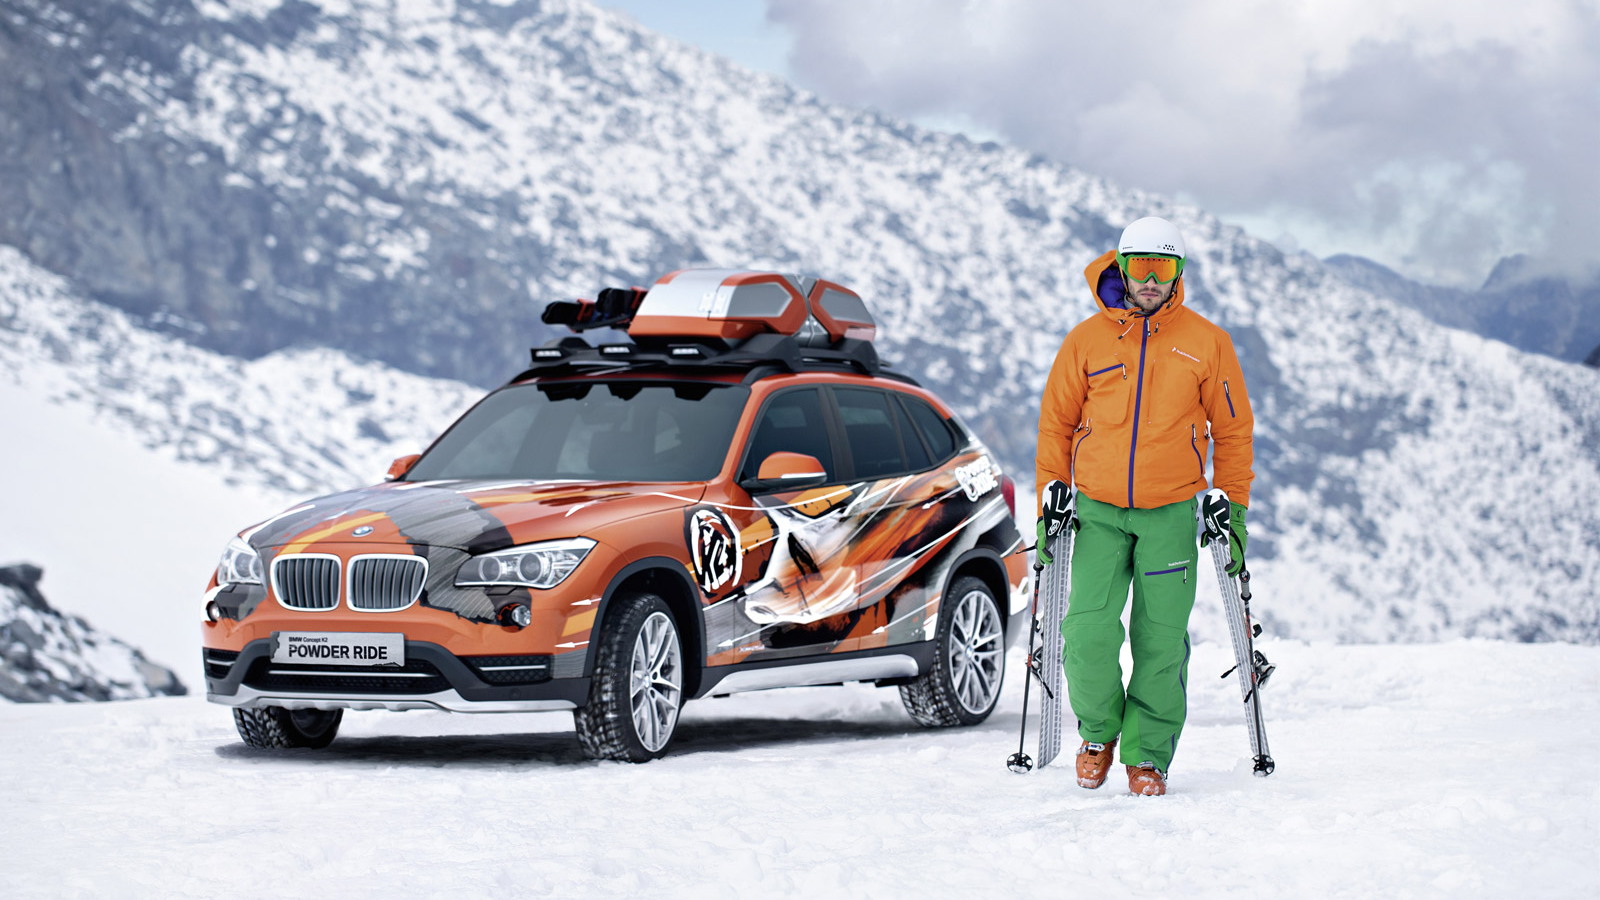 BMW Concept K2 Powder Ride Edition